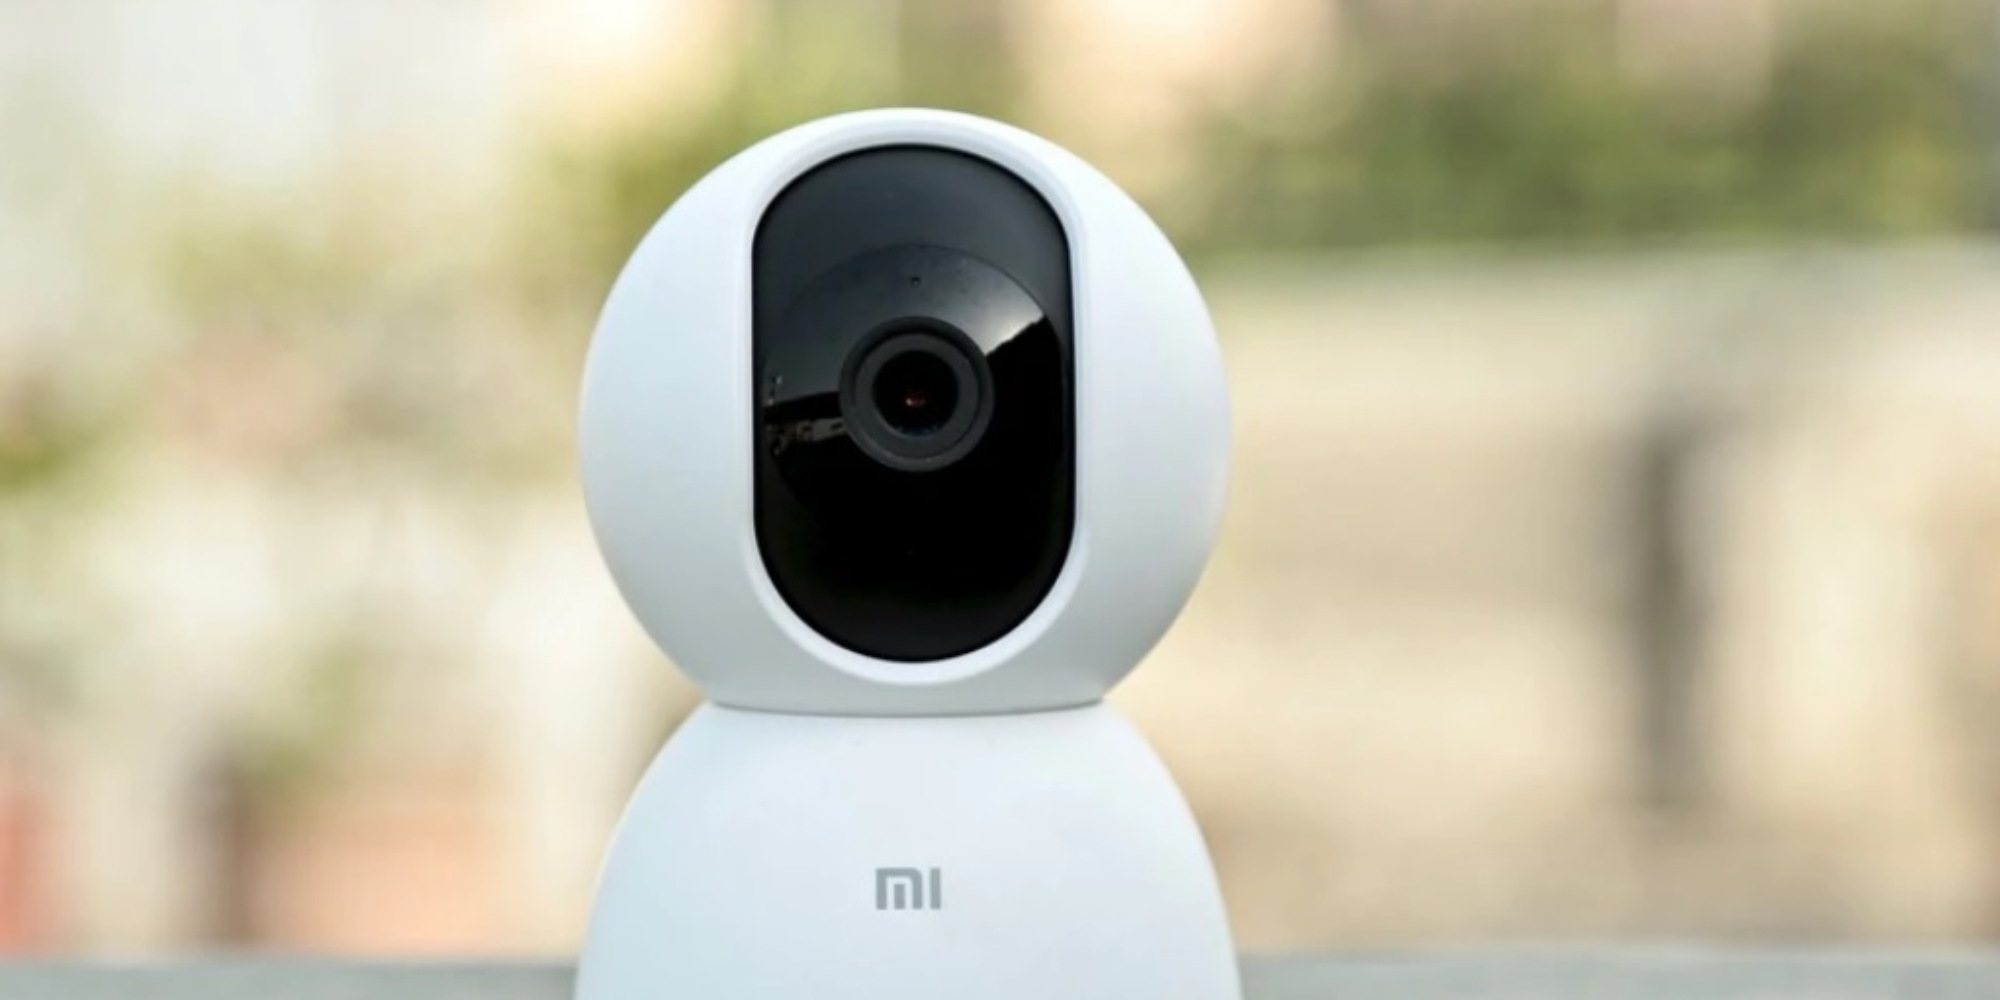 The Mi Home Security Camera Basic 1080p